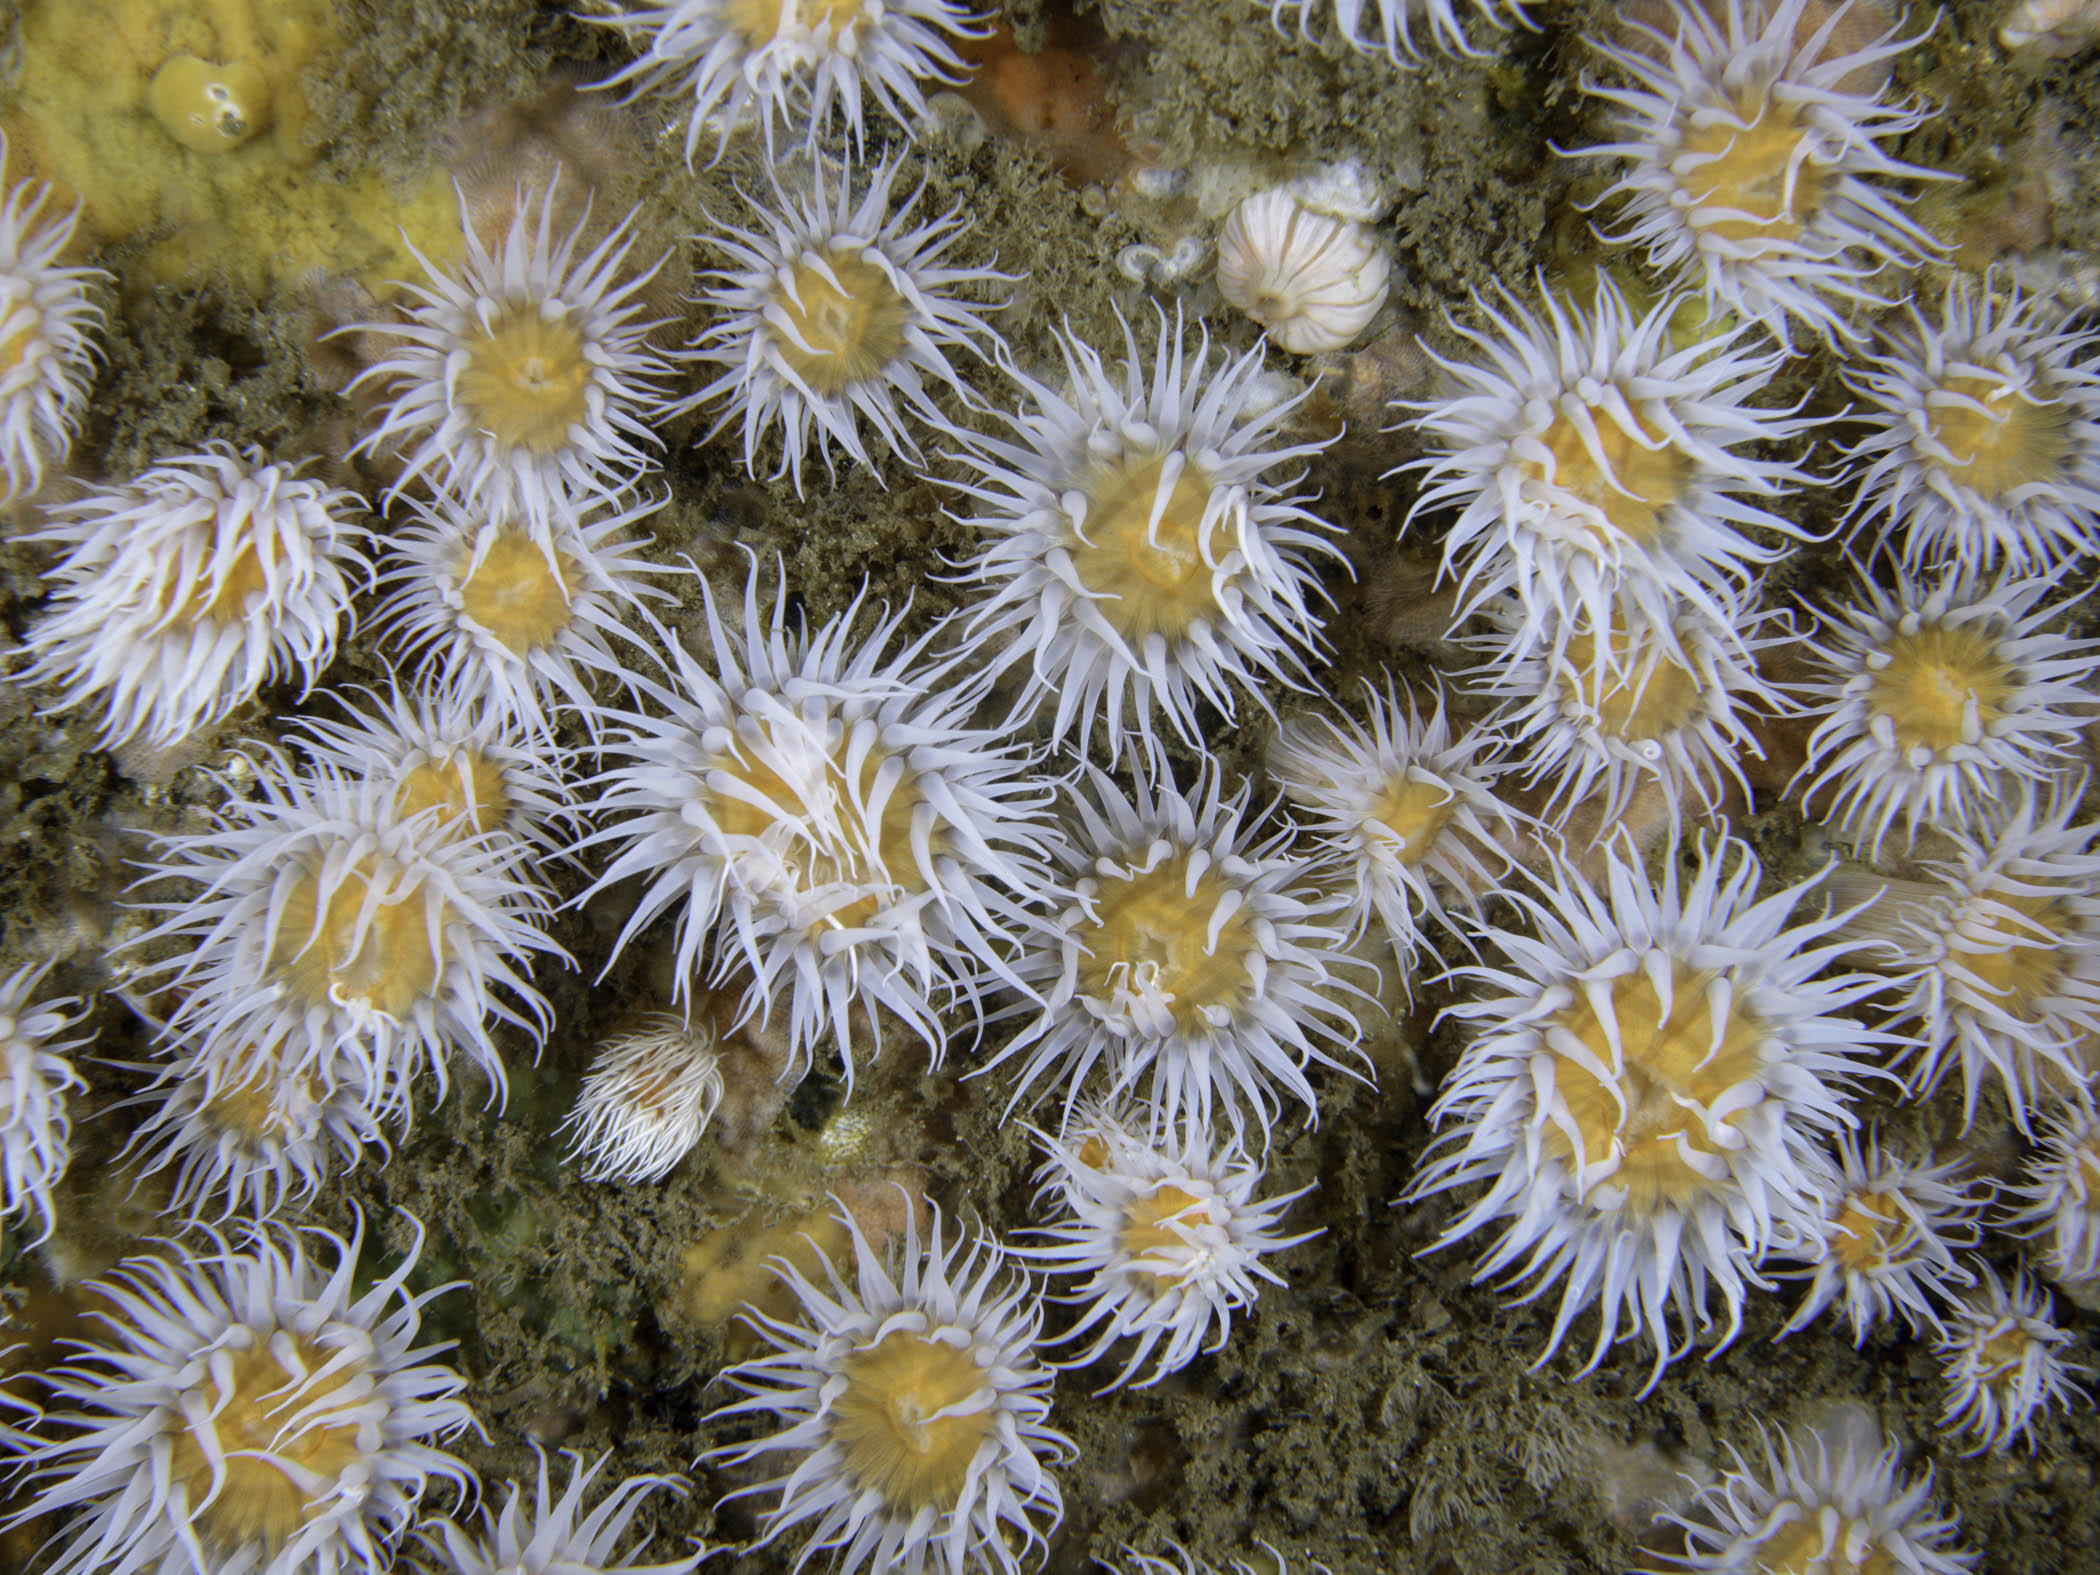 image: Actinothoe sphyrodeta. Isles of Scilly, 2016.